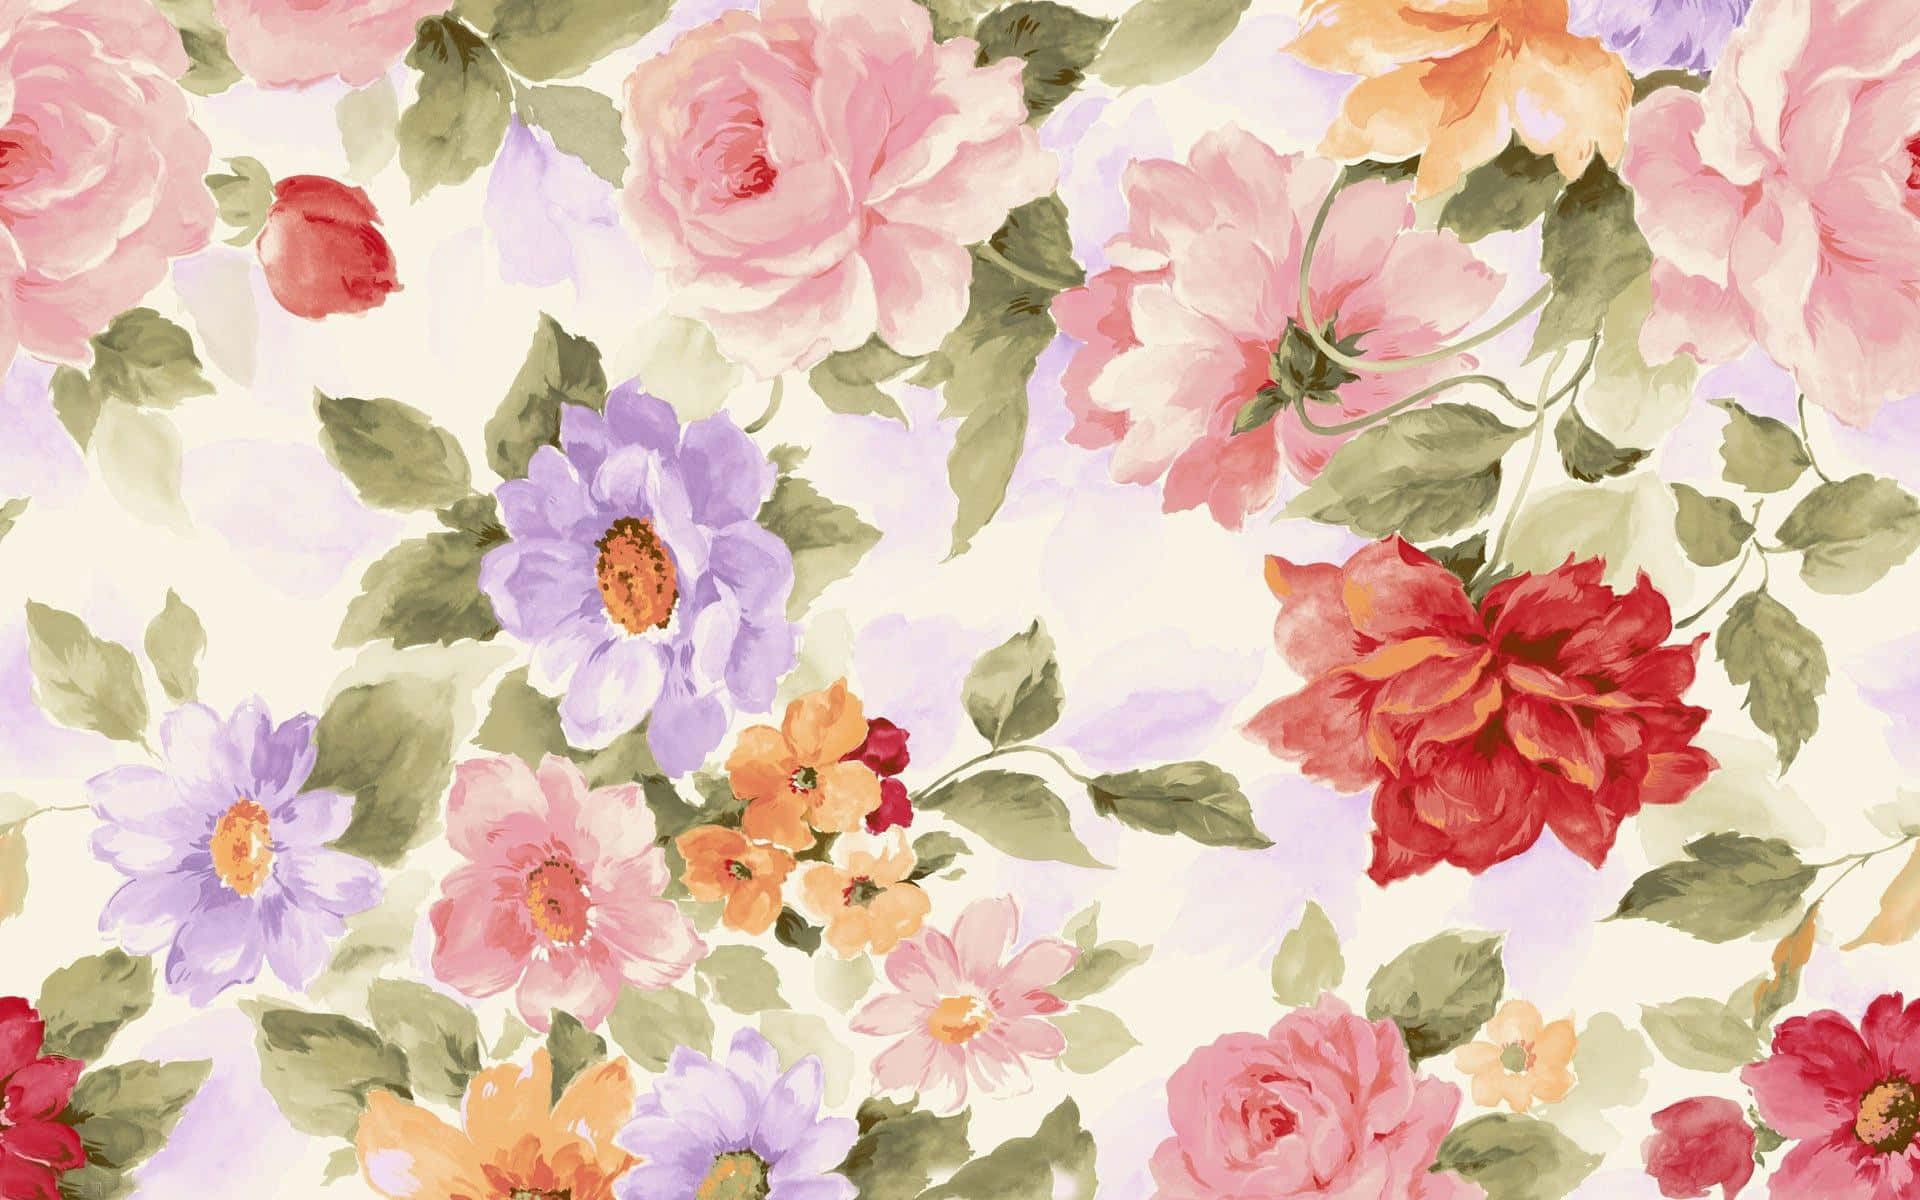 Enchanting Floral Art in Vibrant Colors Wallpaper